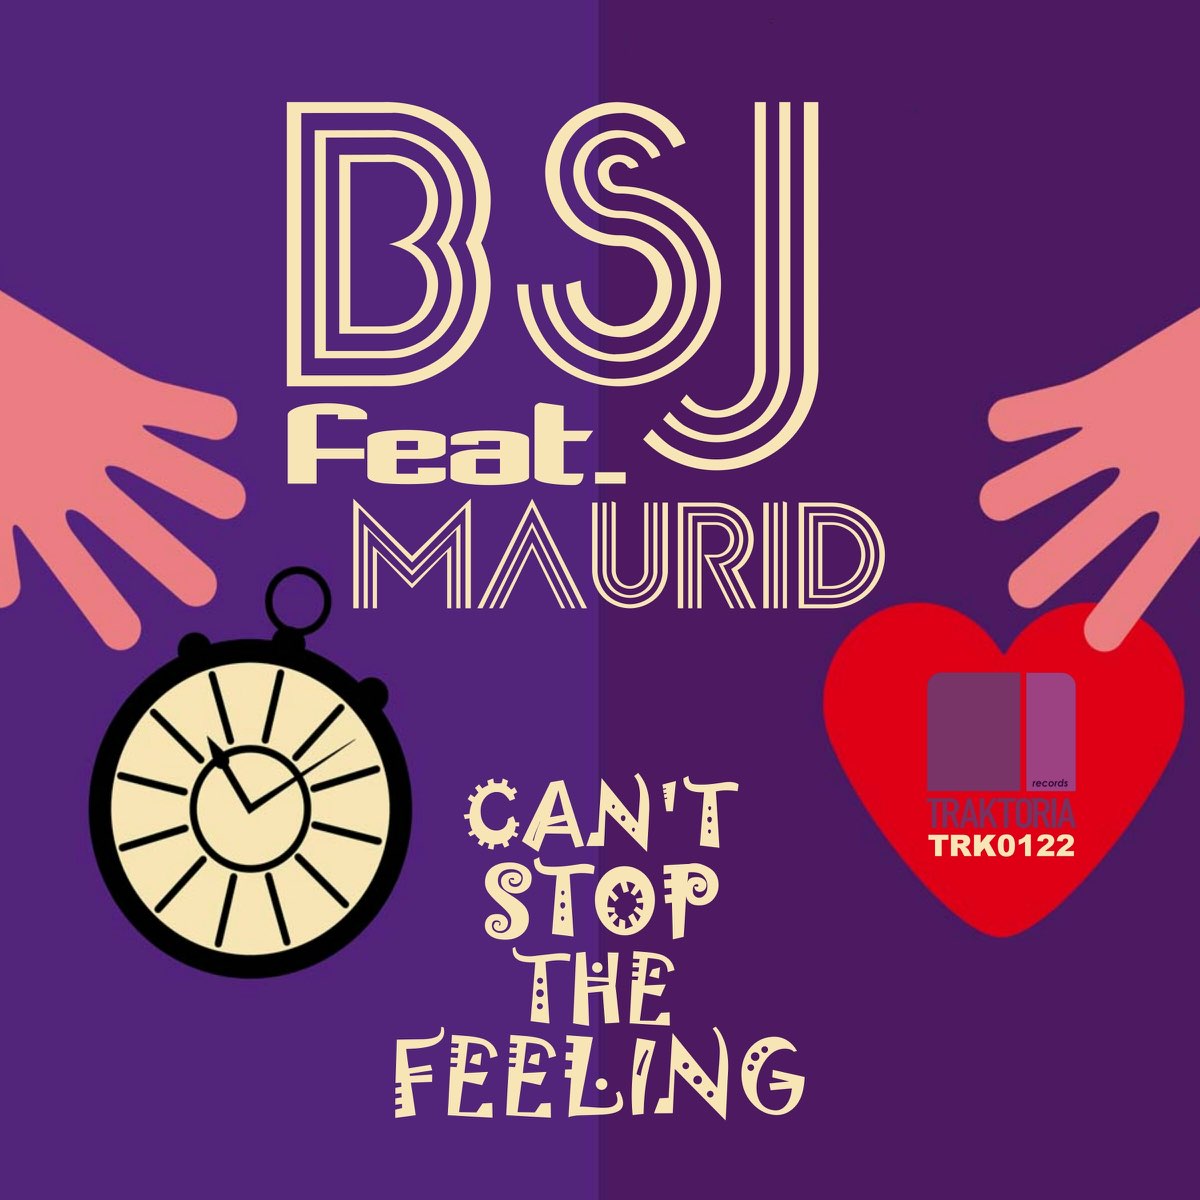 Can't stop the feeling. Feeling песня. Can't stop the feeling! (Mixed). The feeling (Original Mix).